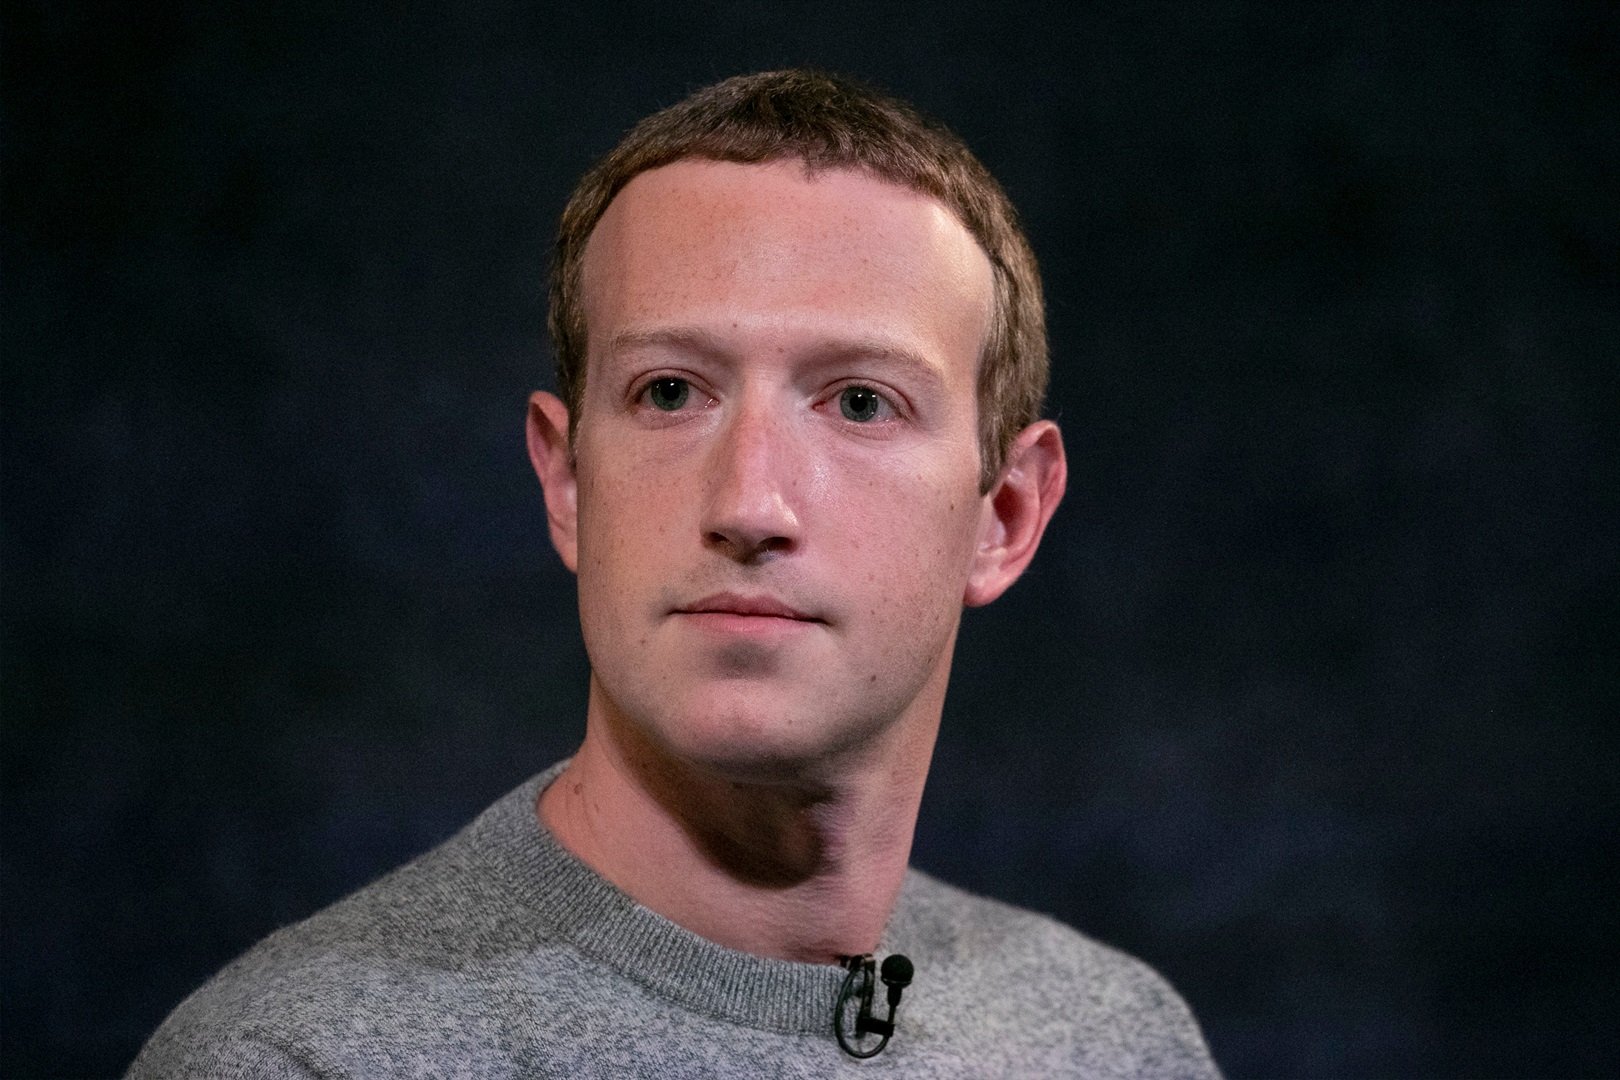 Mark Zuckerberg has lost 70 billion in net worth, bumping him down to